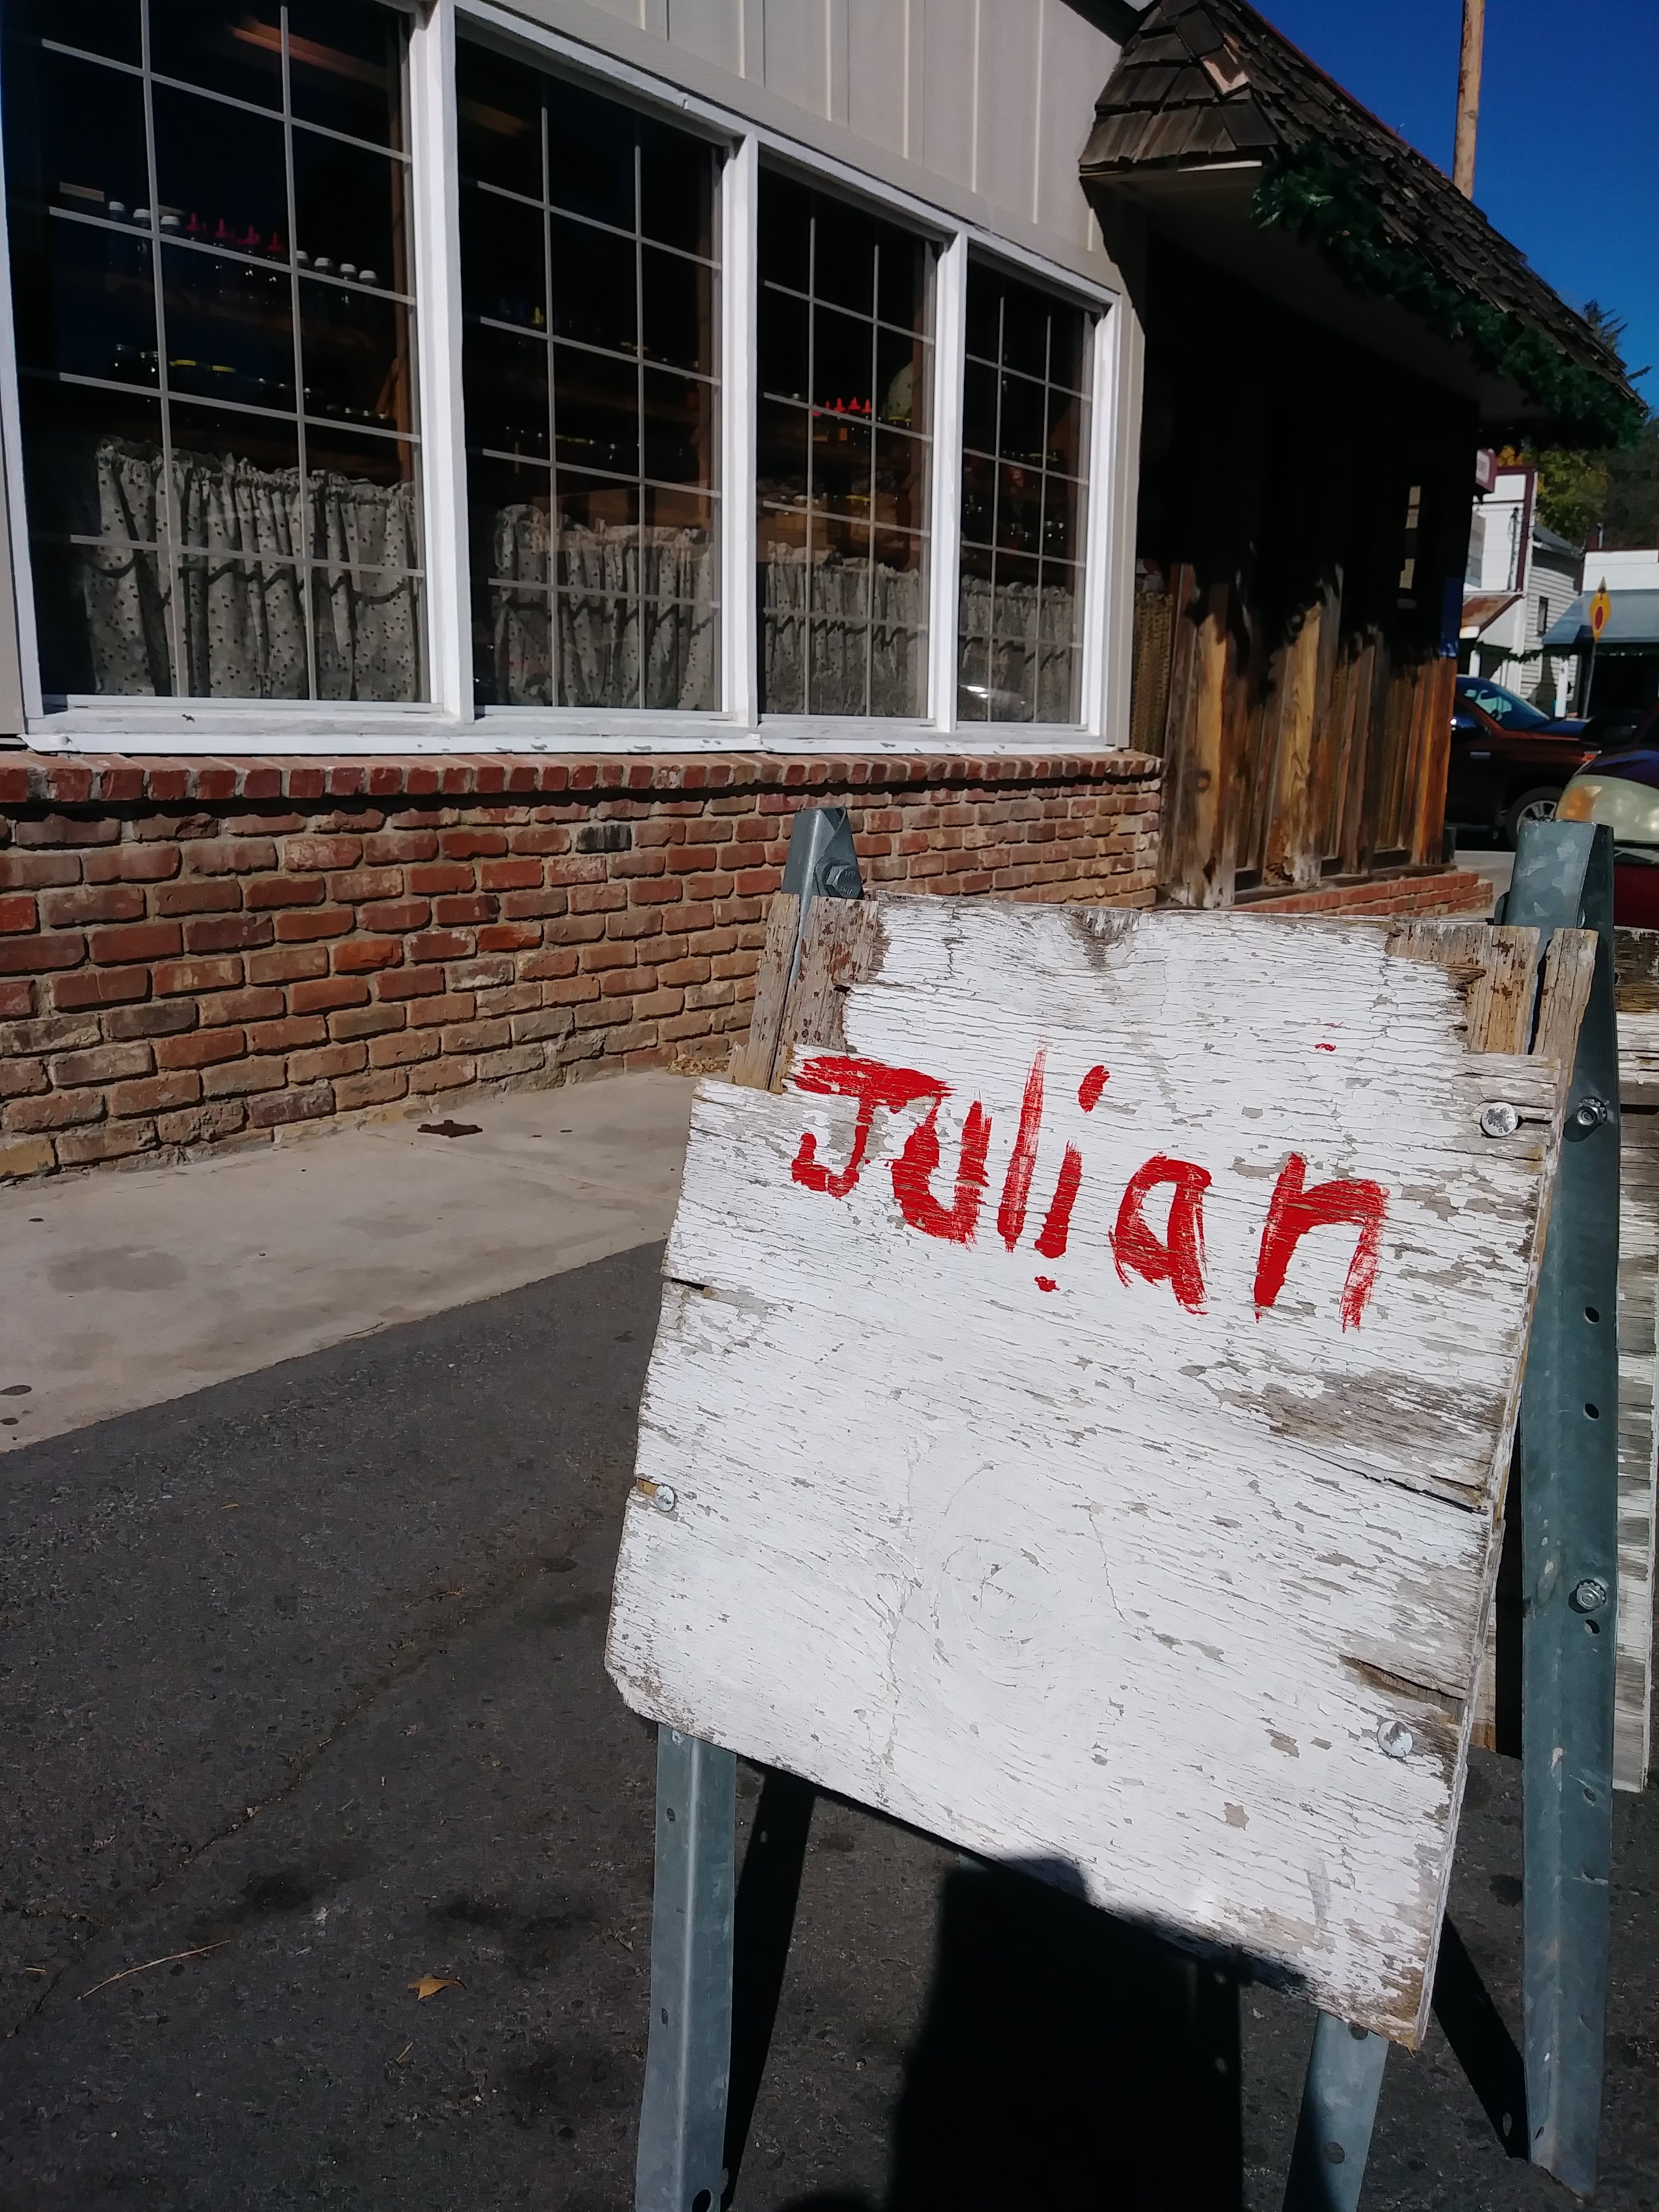 Small cute town called “Julian”